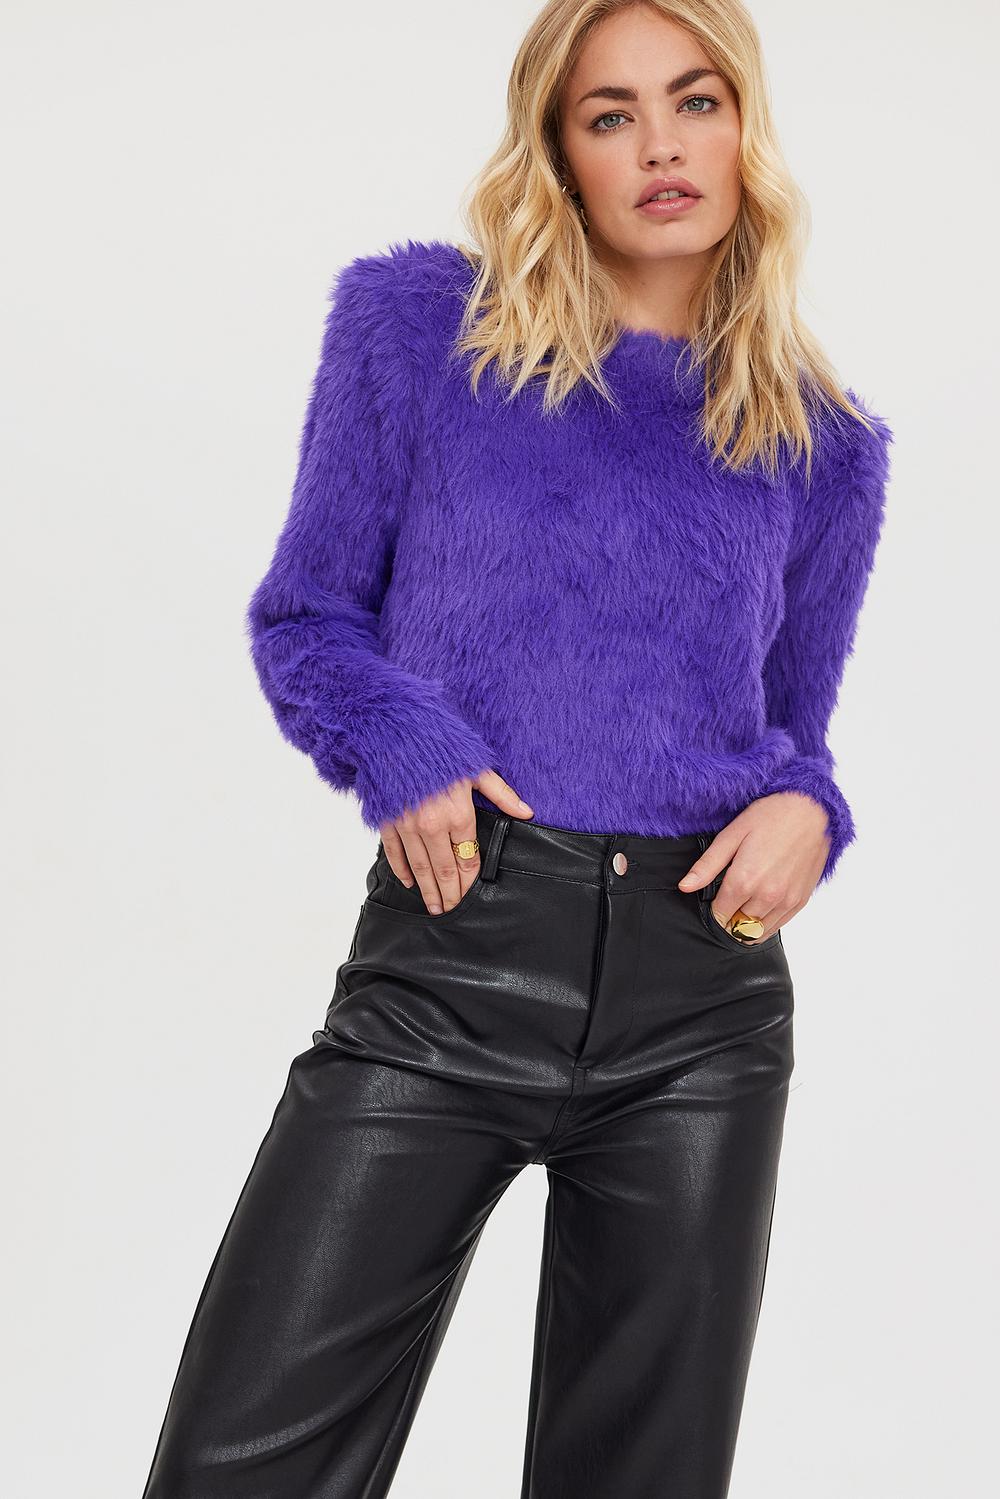 Purple fluffy jumper